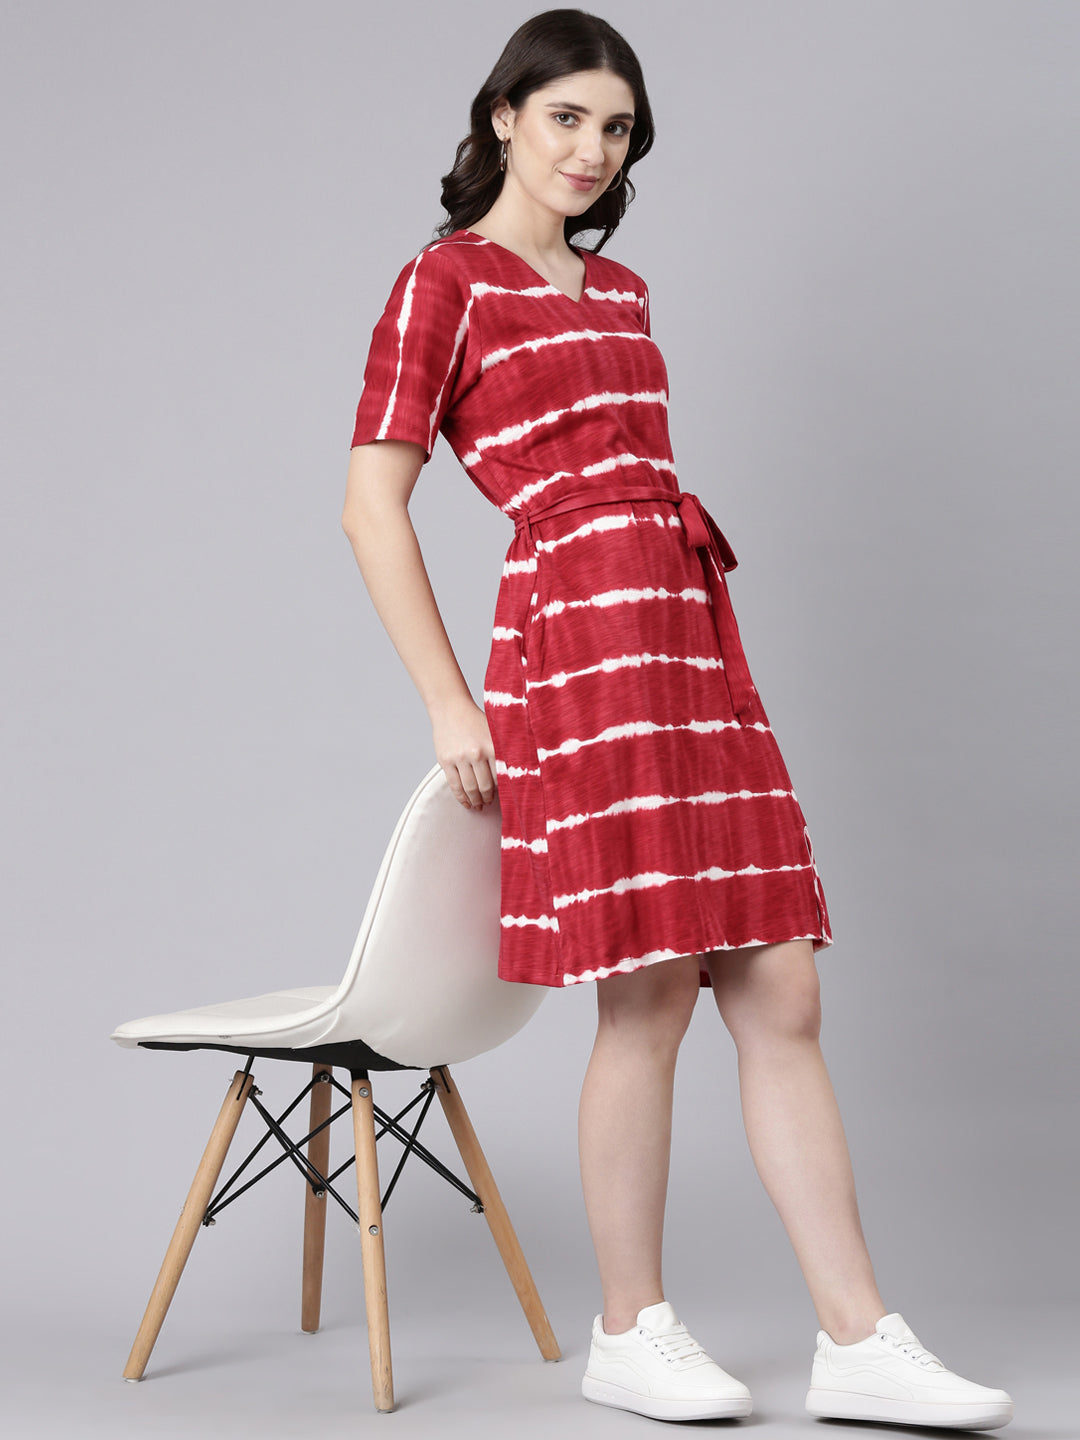 TheShaili Cotton Red Knee Length Dress/V- Neck Half Sleeves Tie-Dye Design Dresses for Women and Girls